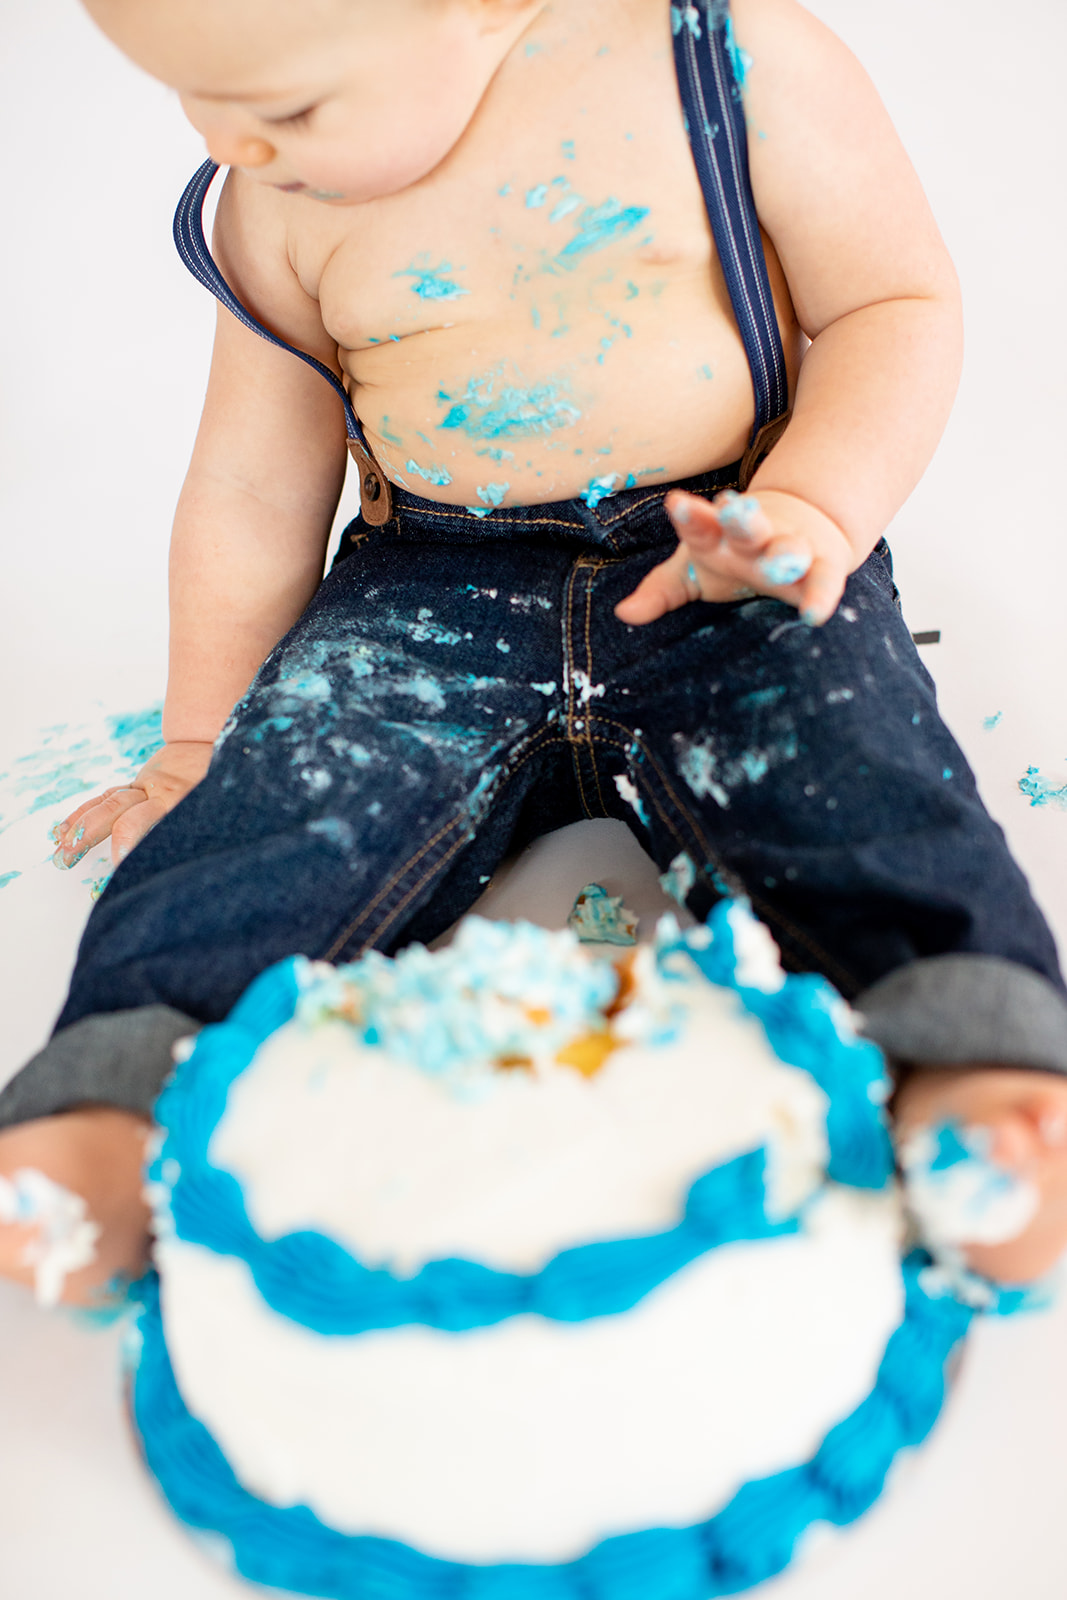 One Year Old Baby Boy Cake Smash  - Image Property of www.j-dphoto.com